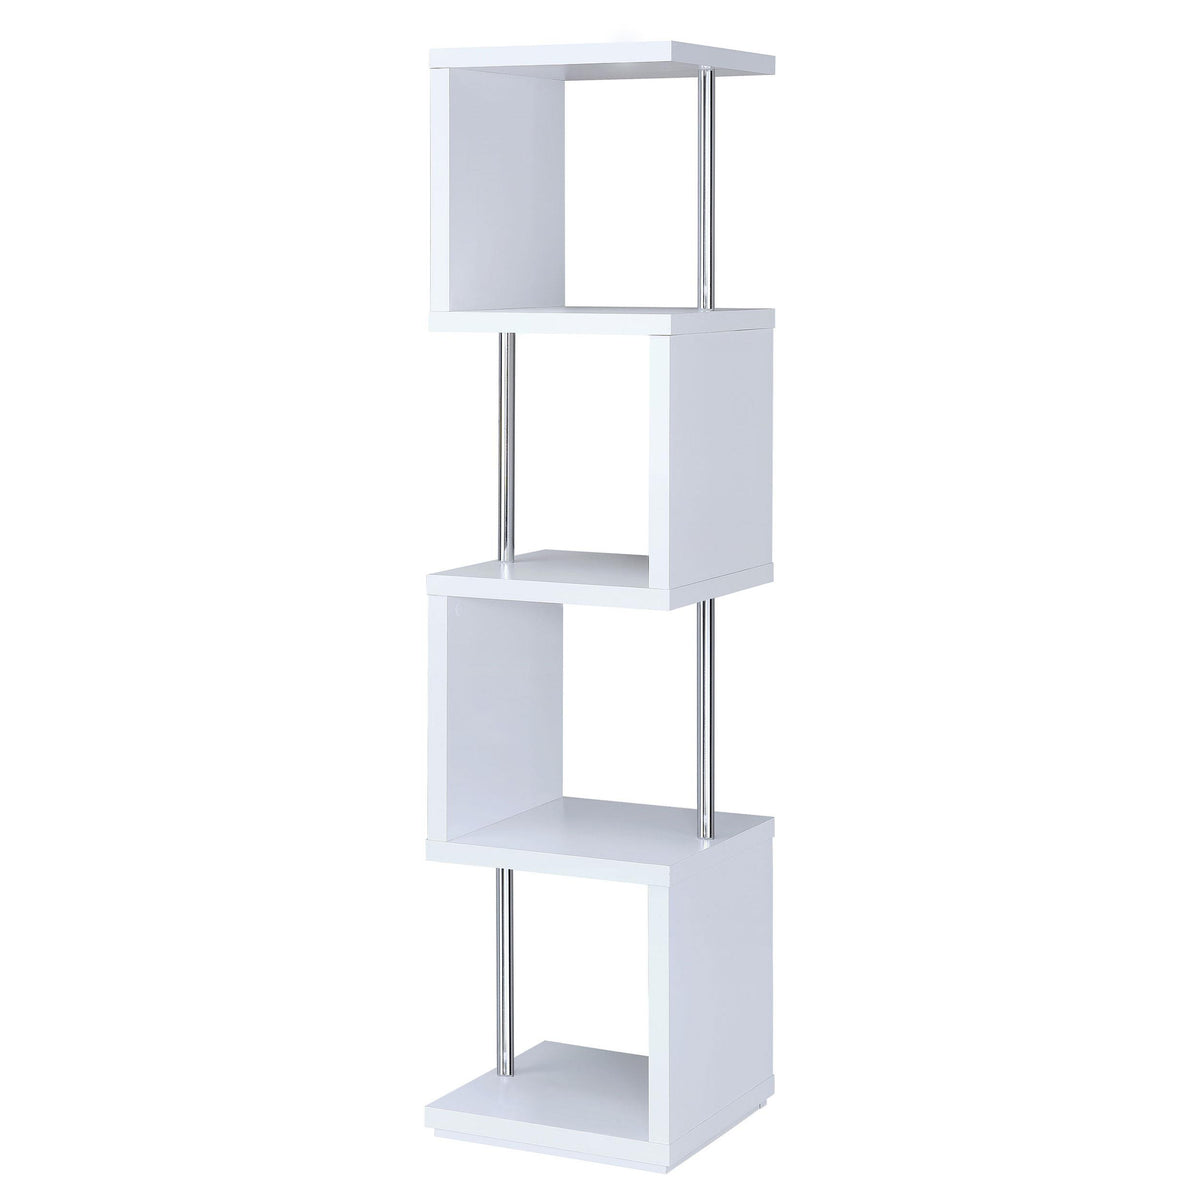 Baxter 4-shelf Bookcase White and Chrome Baxter 4-shelf Bookcase White and Chrome Half Price Furniture